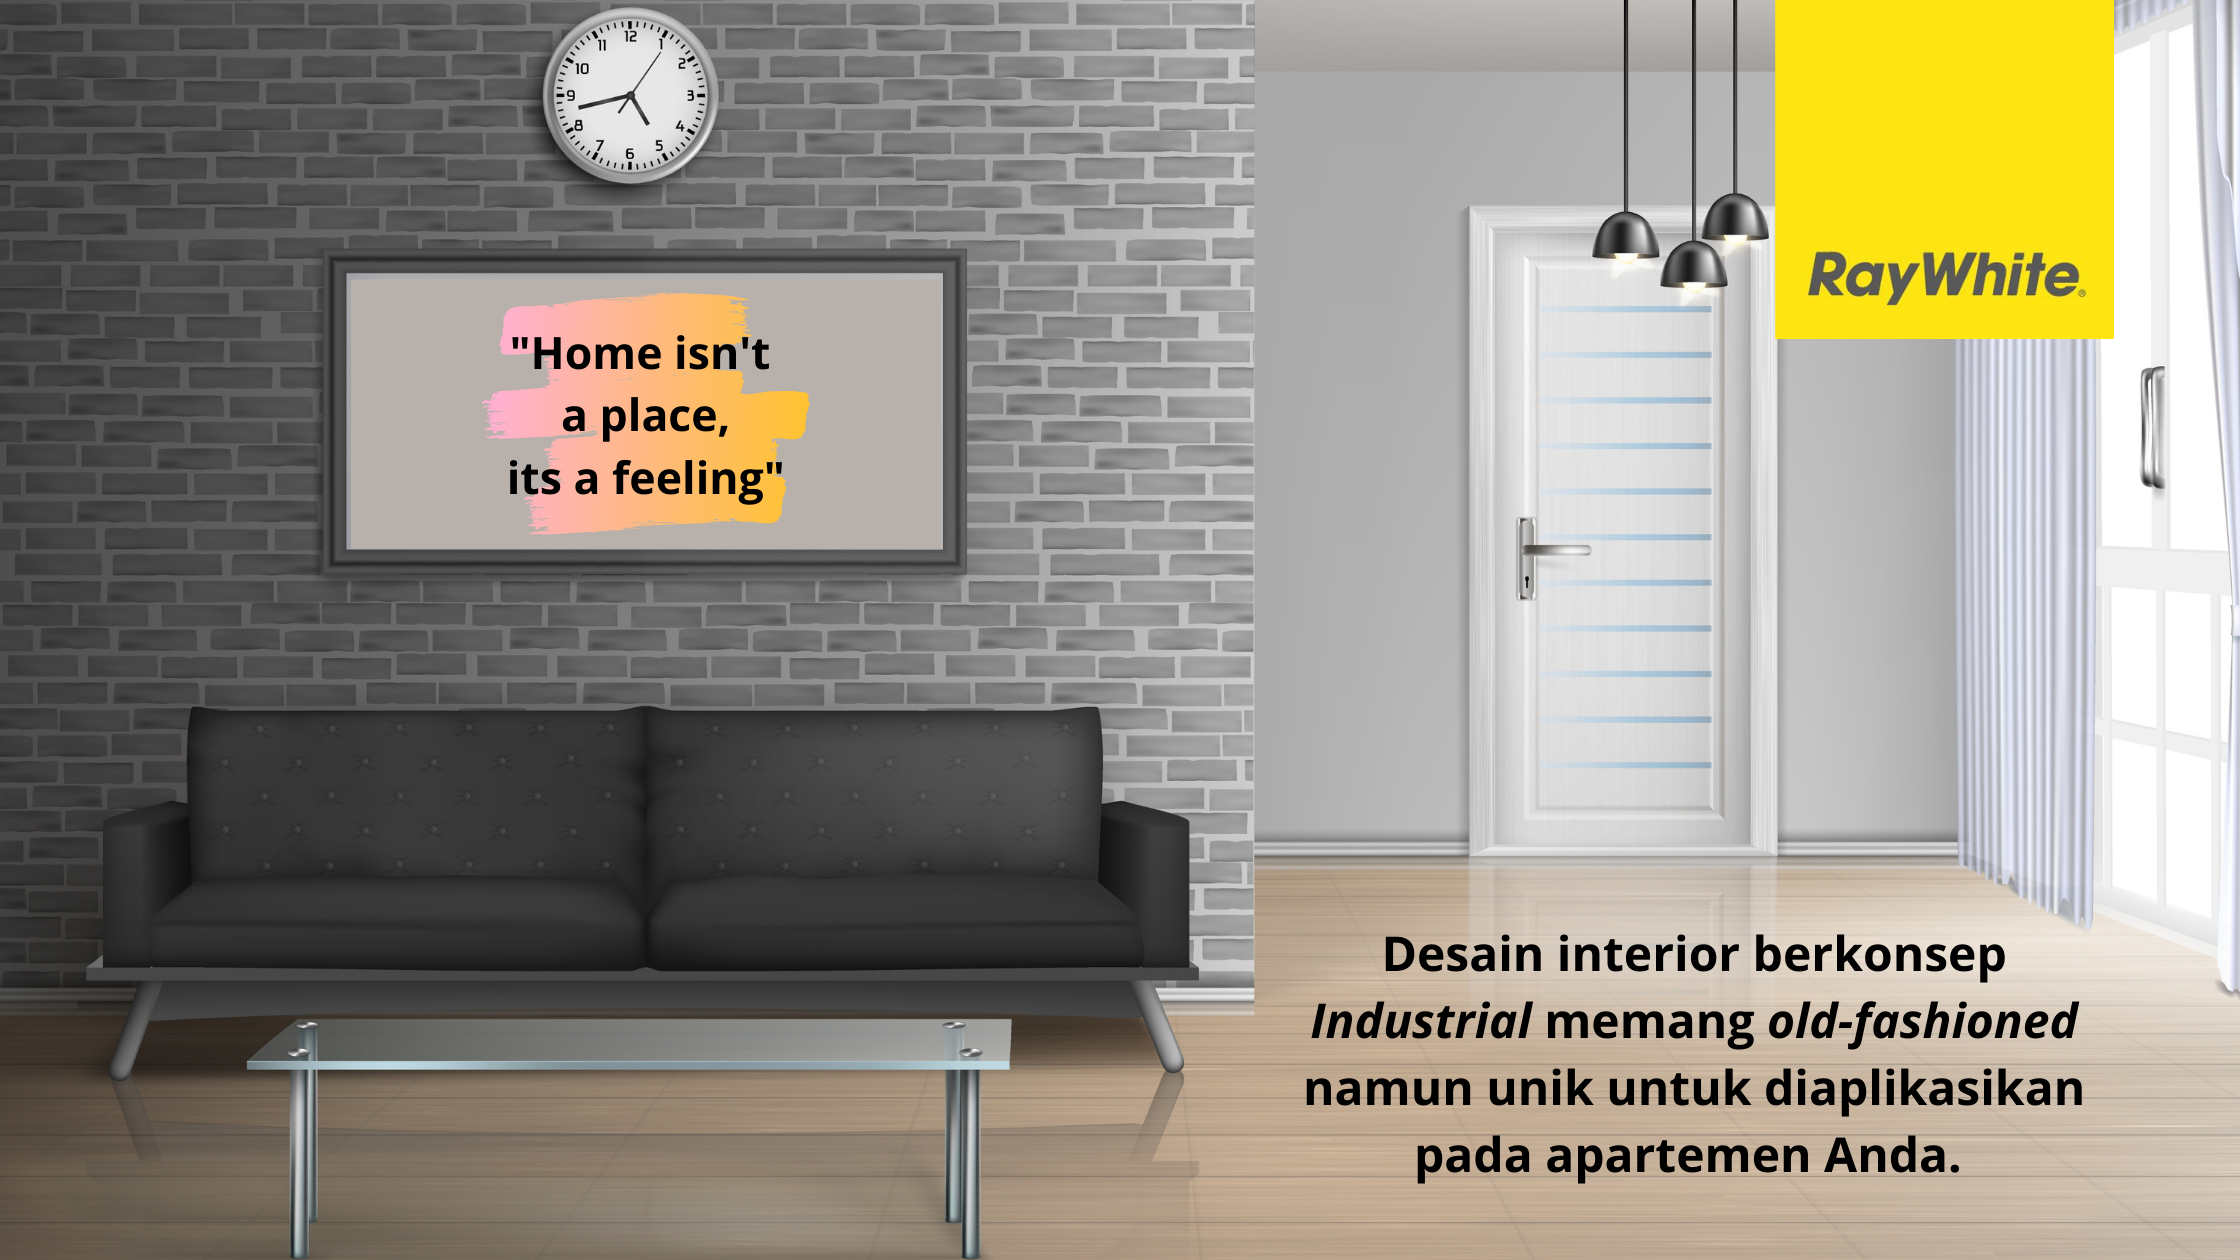 Desain-Apartemen-Industrial-Scandinavian-Japaneses-Minimalist-Trend-2020-Ray-White